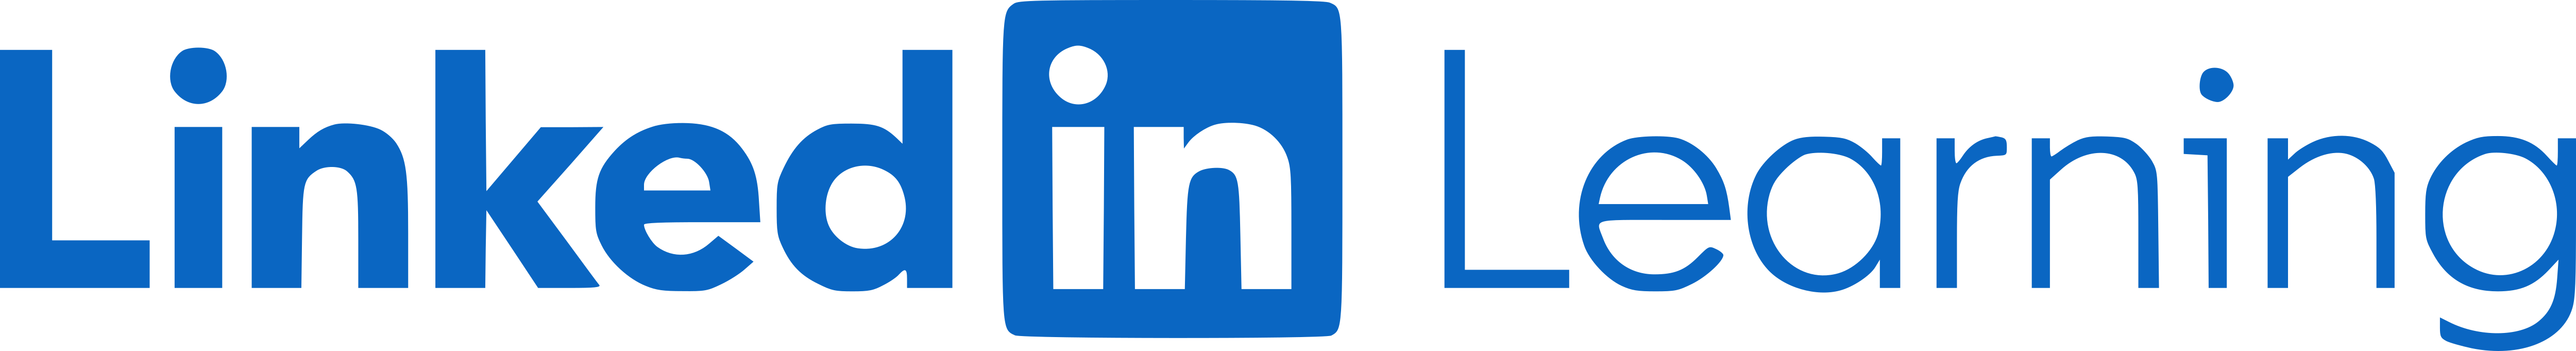 LinkedIn Learning – Logos Download